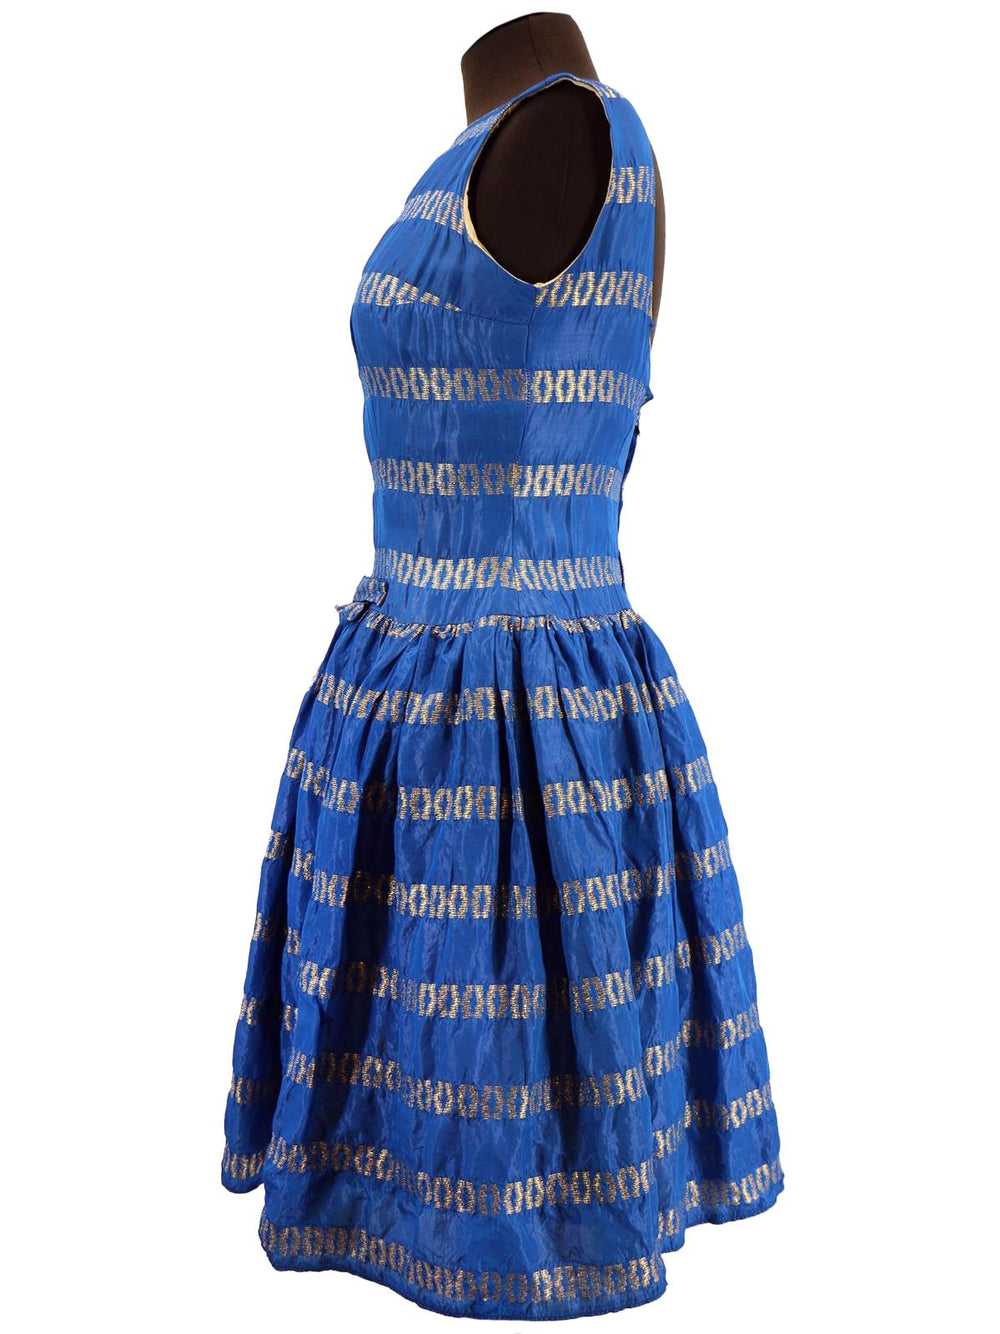 True Vintage Blue and Gold 1950s Dress - image 3